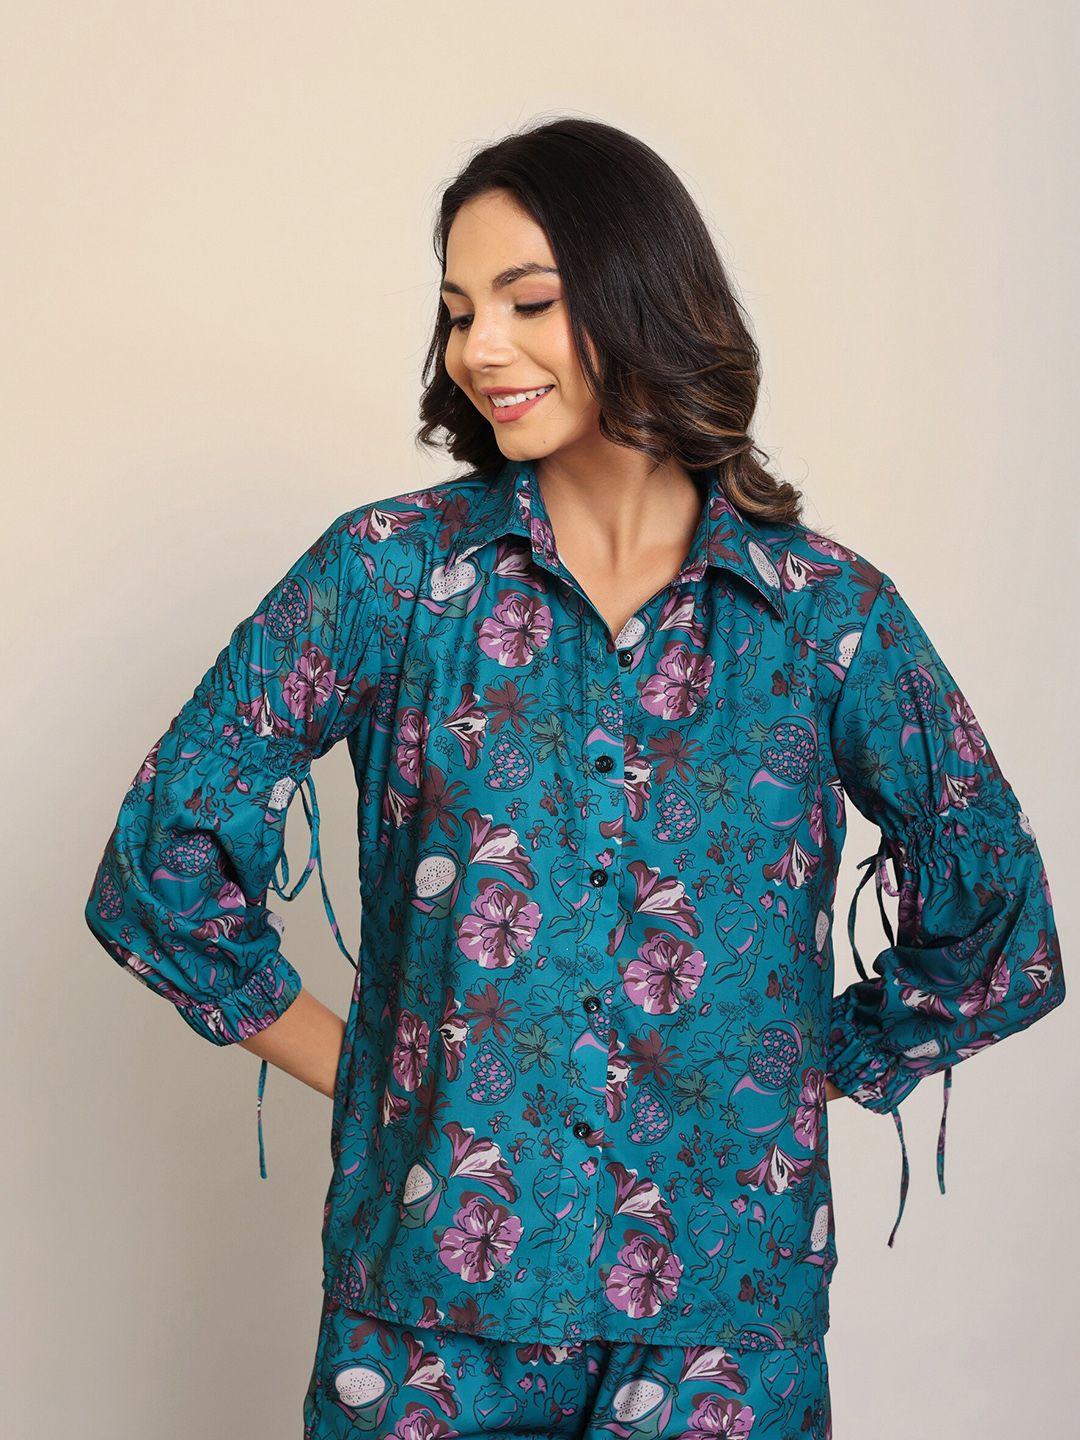 kaori by shreya agarwal bliss comfort floral printed relaxed shirt